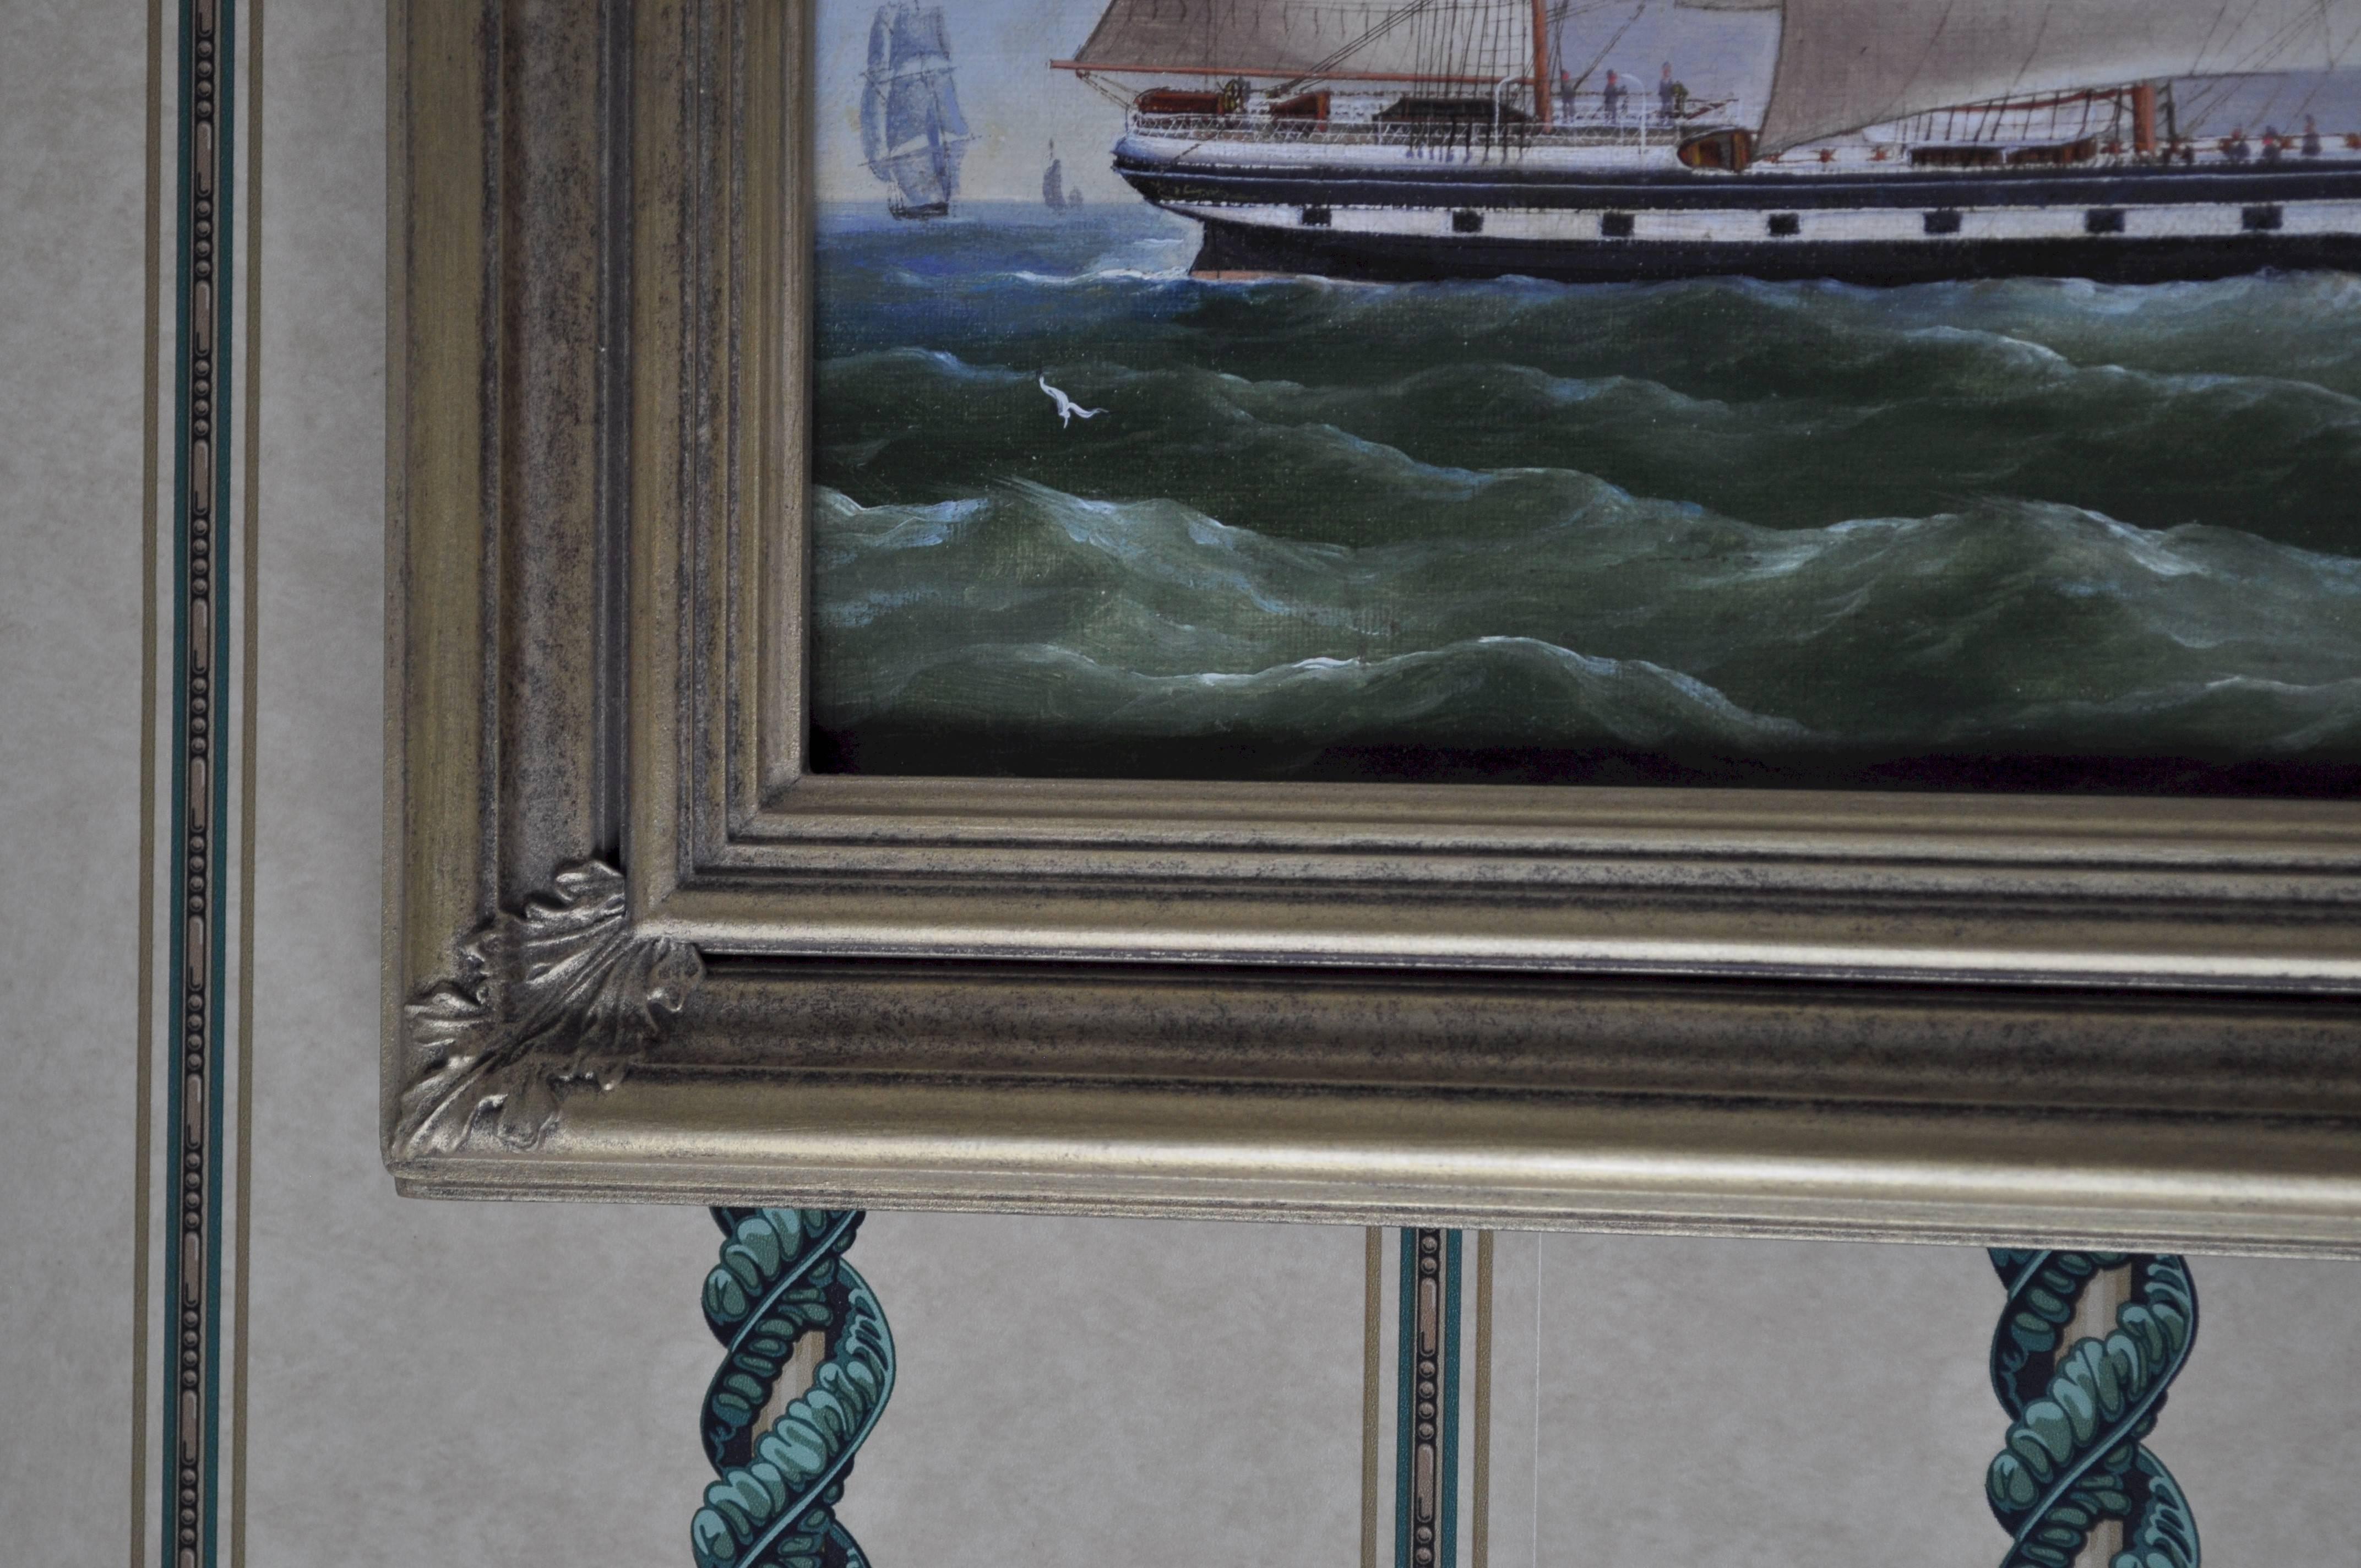 Wrinate in Full Sail - Realist Painting by William Barnett Spencer